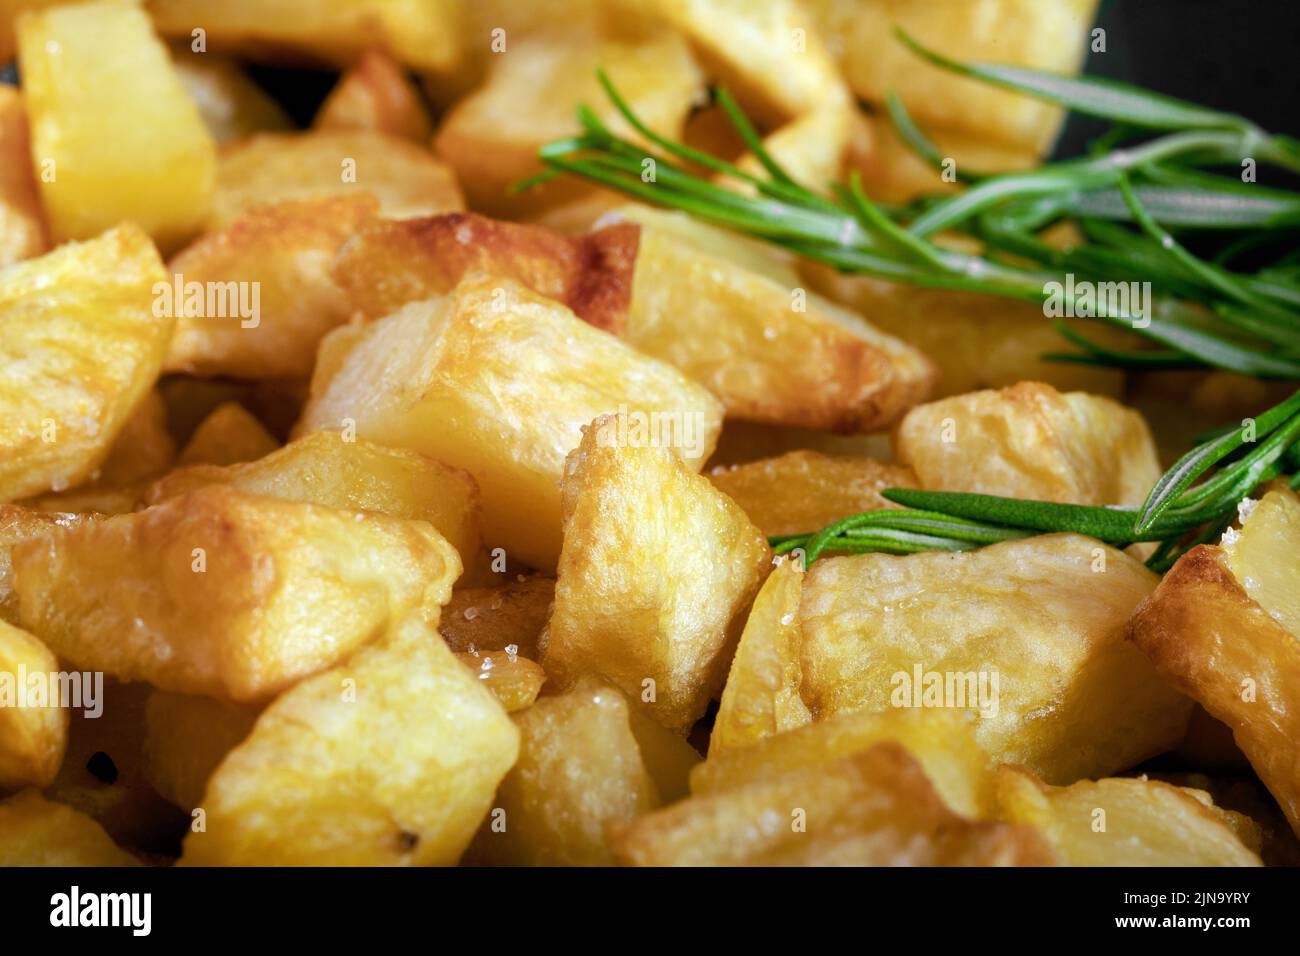 Macro close-up of homemade baked potatoes with rosemary. Stock Photo